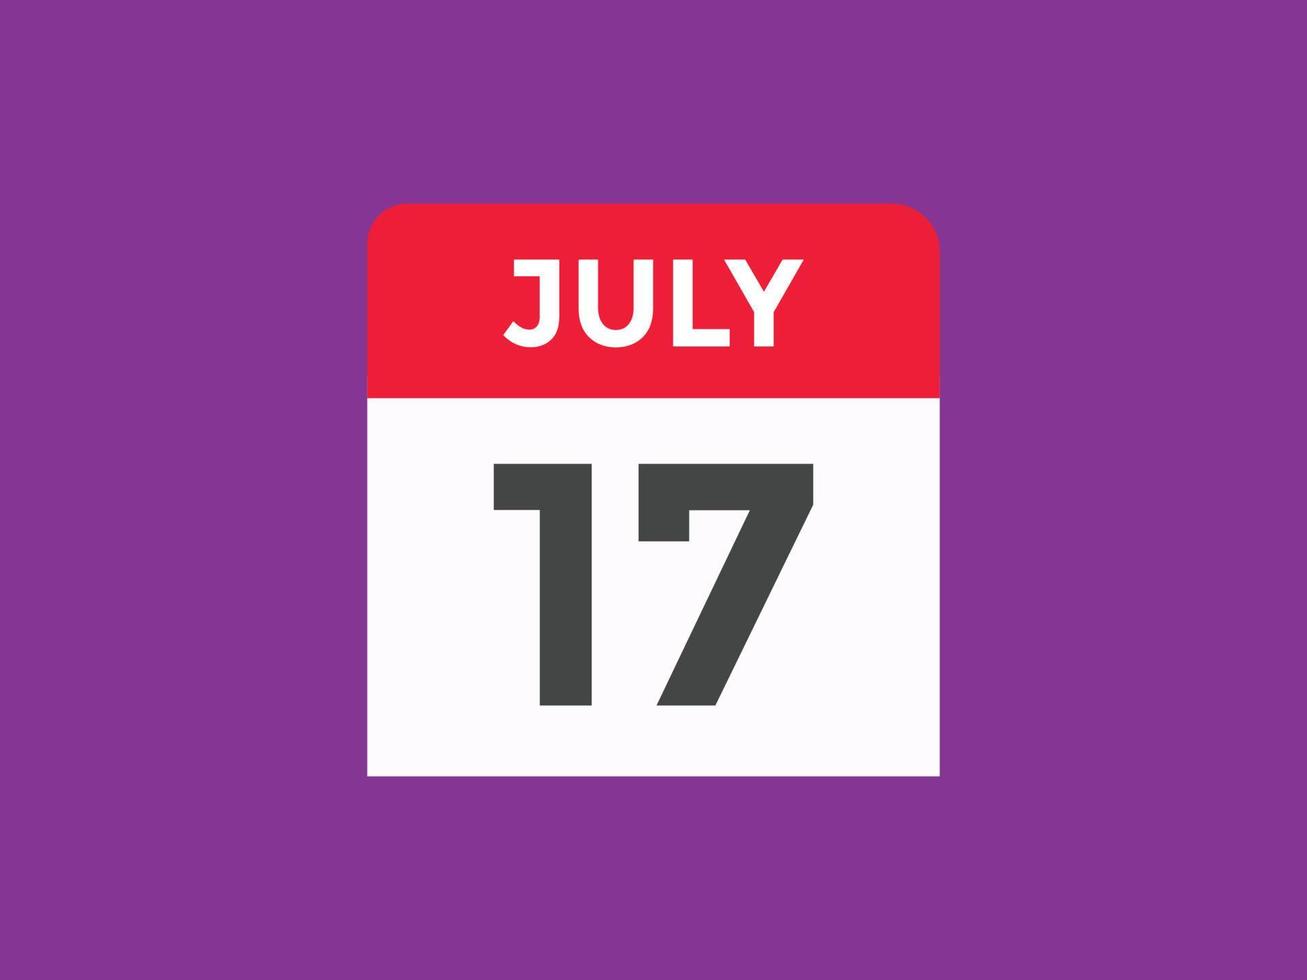 july 17 calendar reminder. 17th july daily calendar icon template. Calendar 17th july icon Design template. Vector illustration